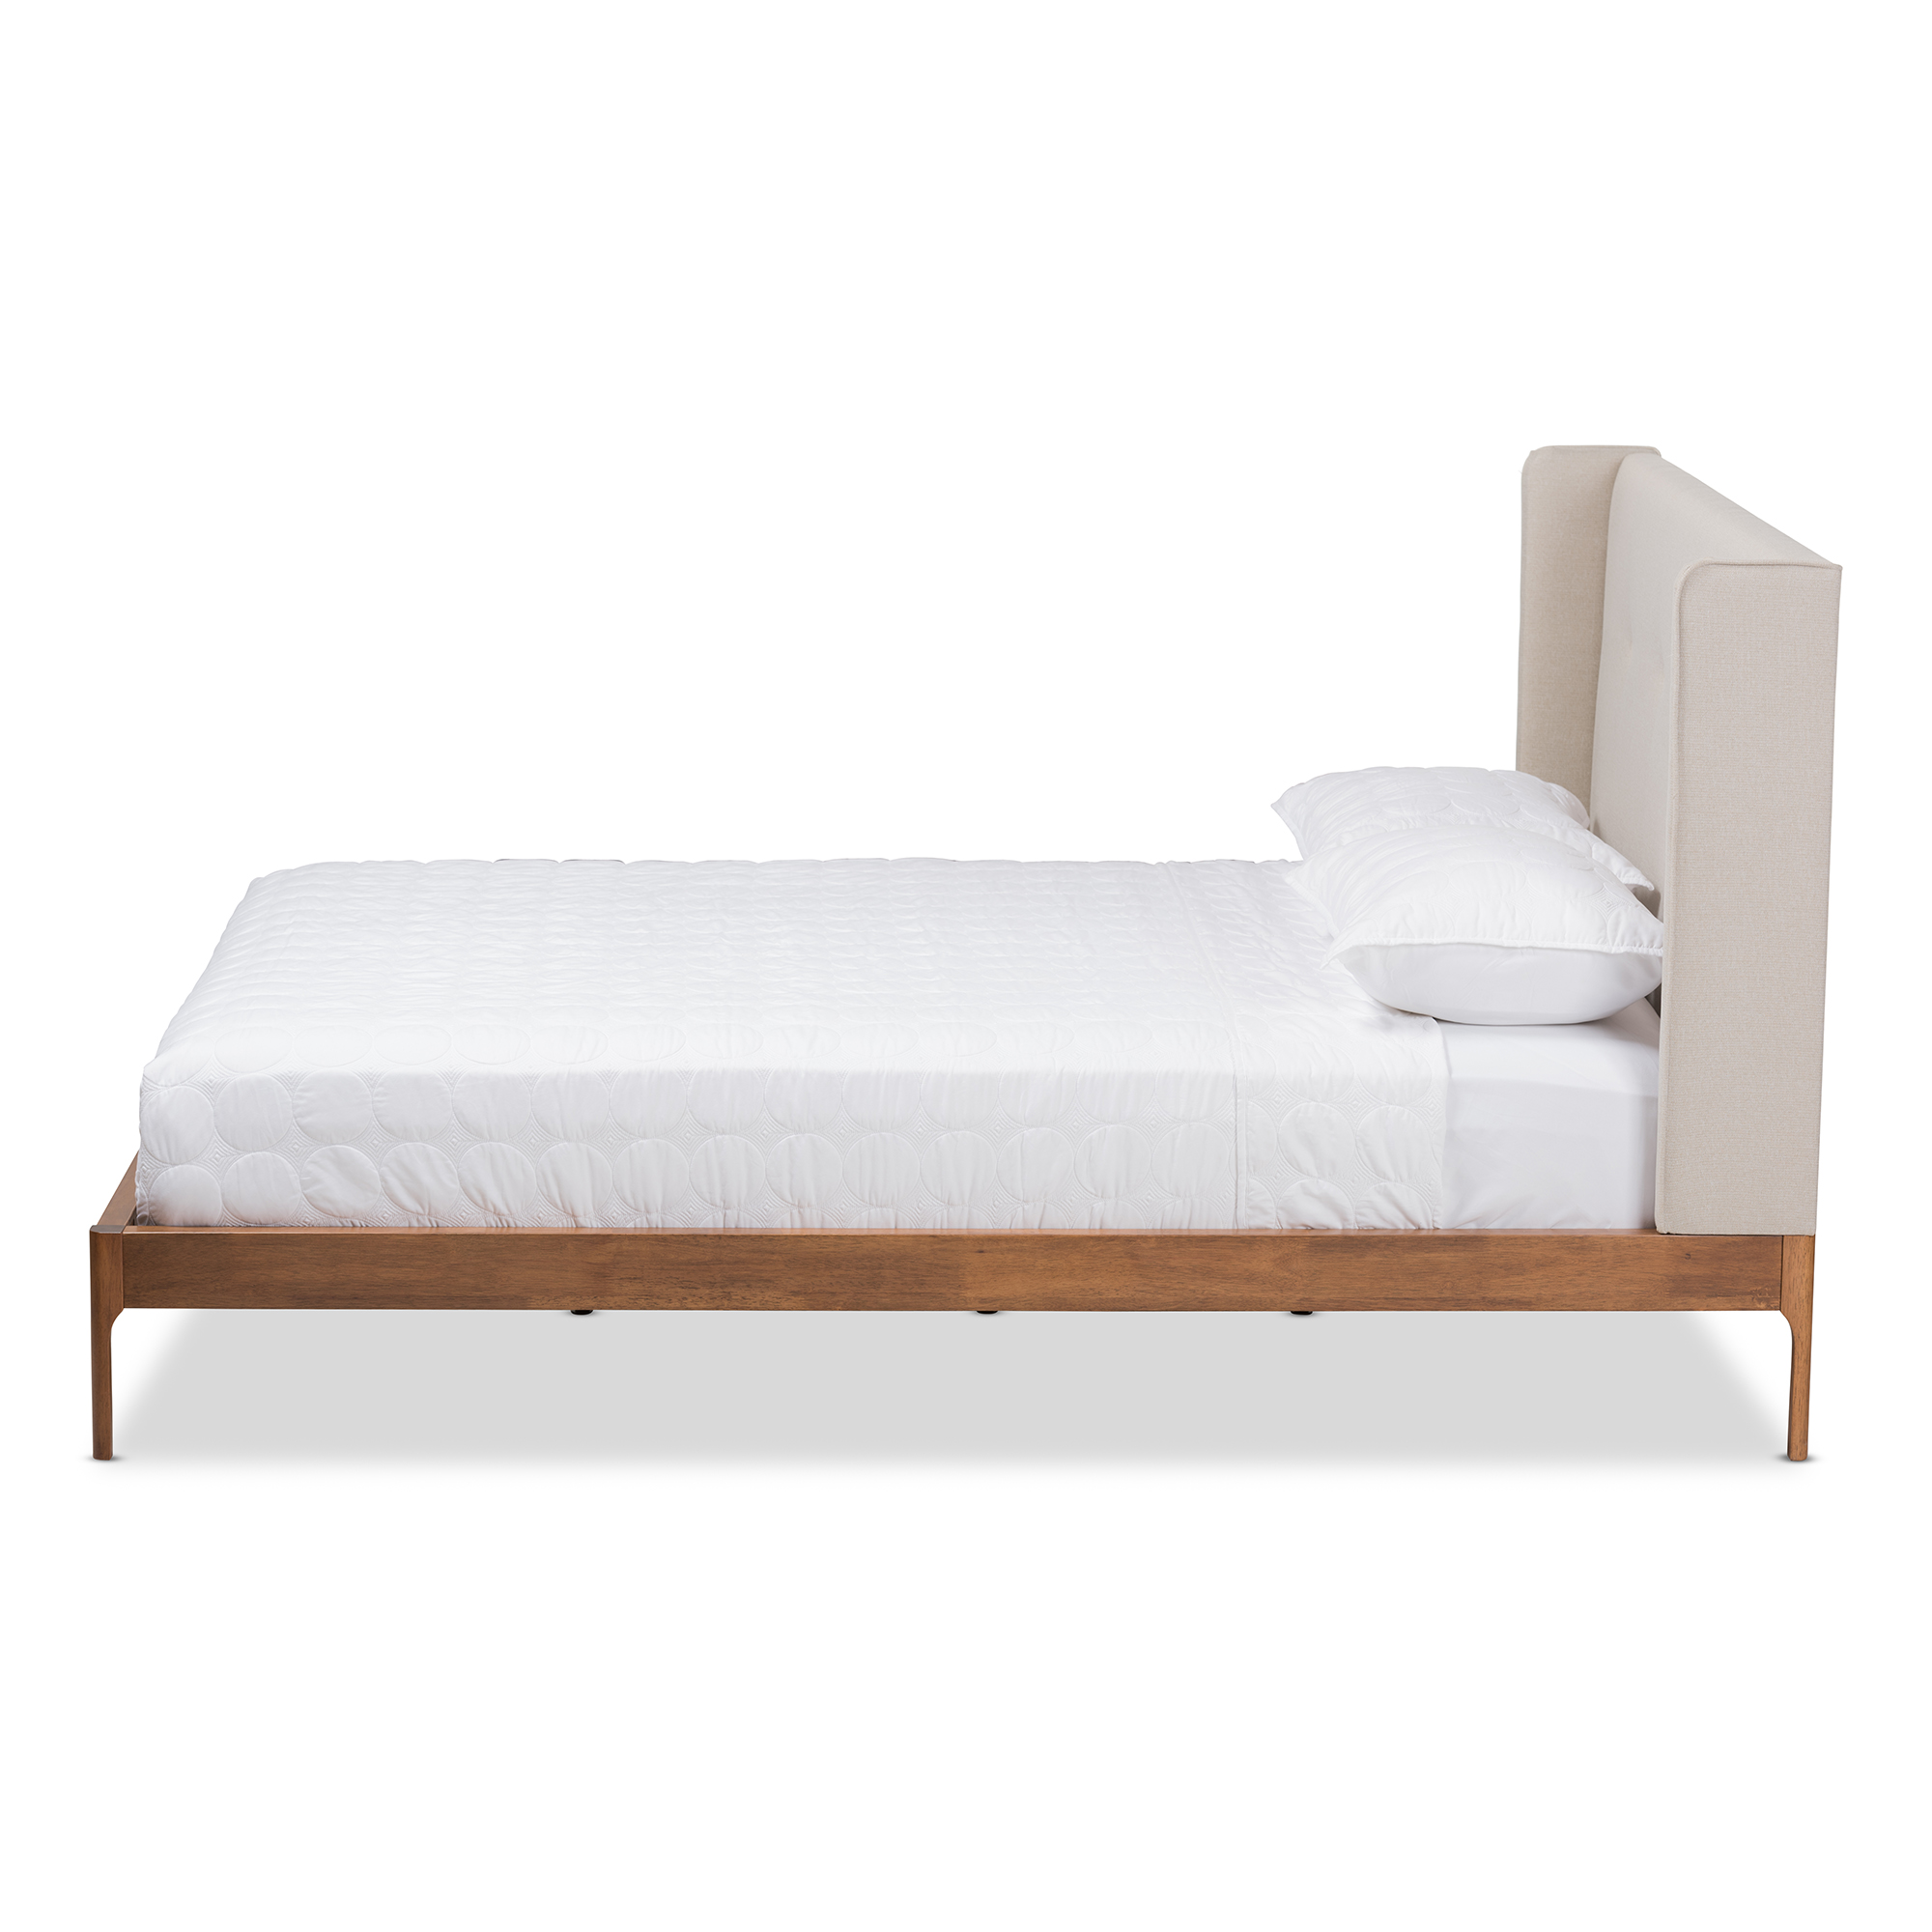 Skyline Decor Walnut Wood Beige Fabric King Size Platform Bed - image 3 of 5